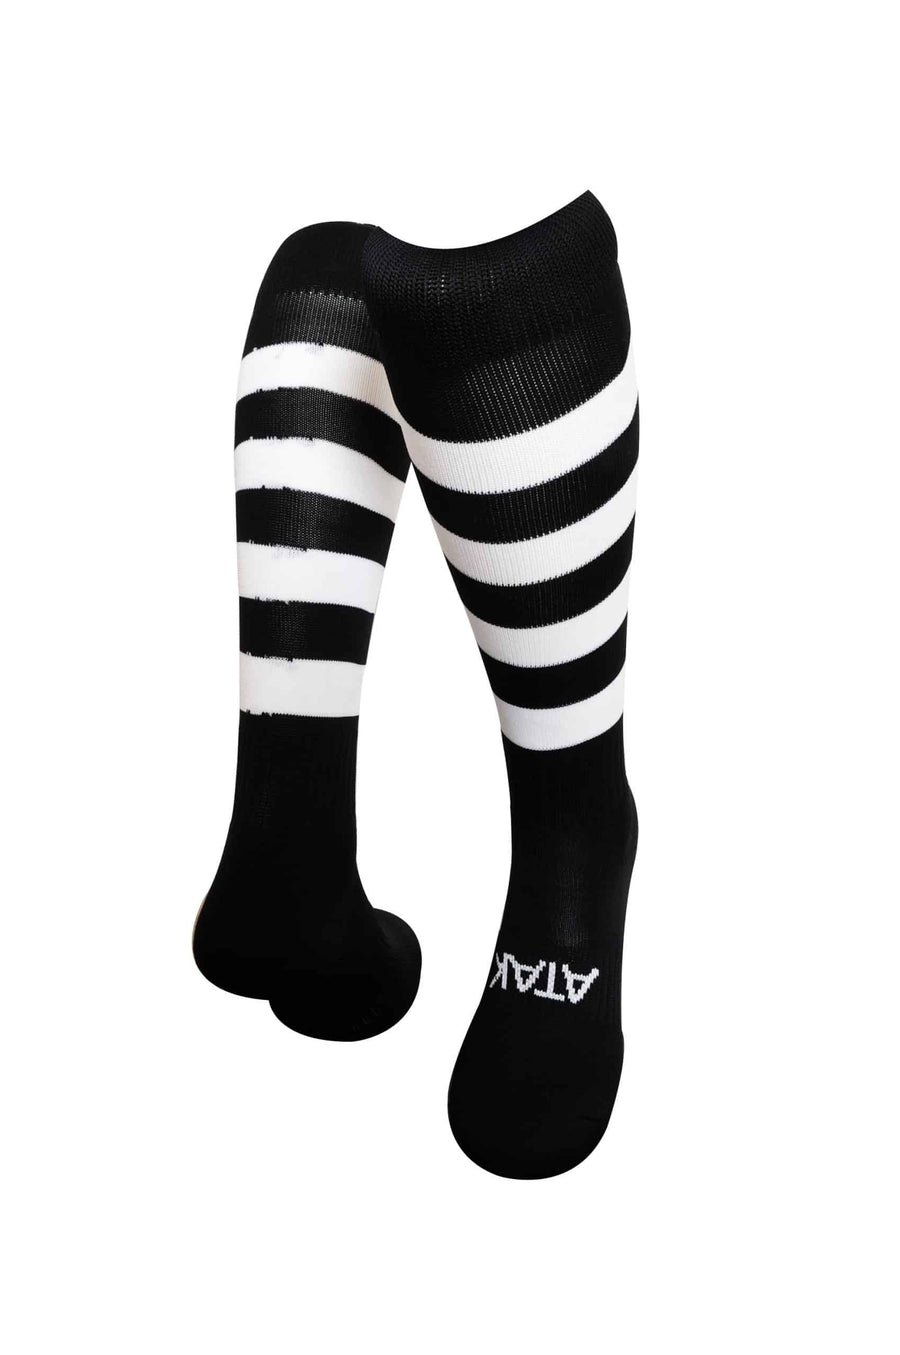 ATAK Hoops Socks Black/White